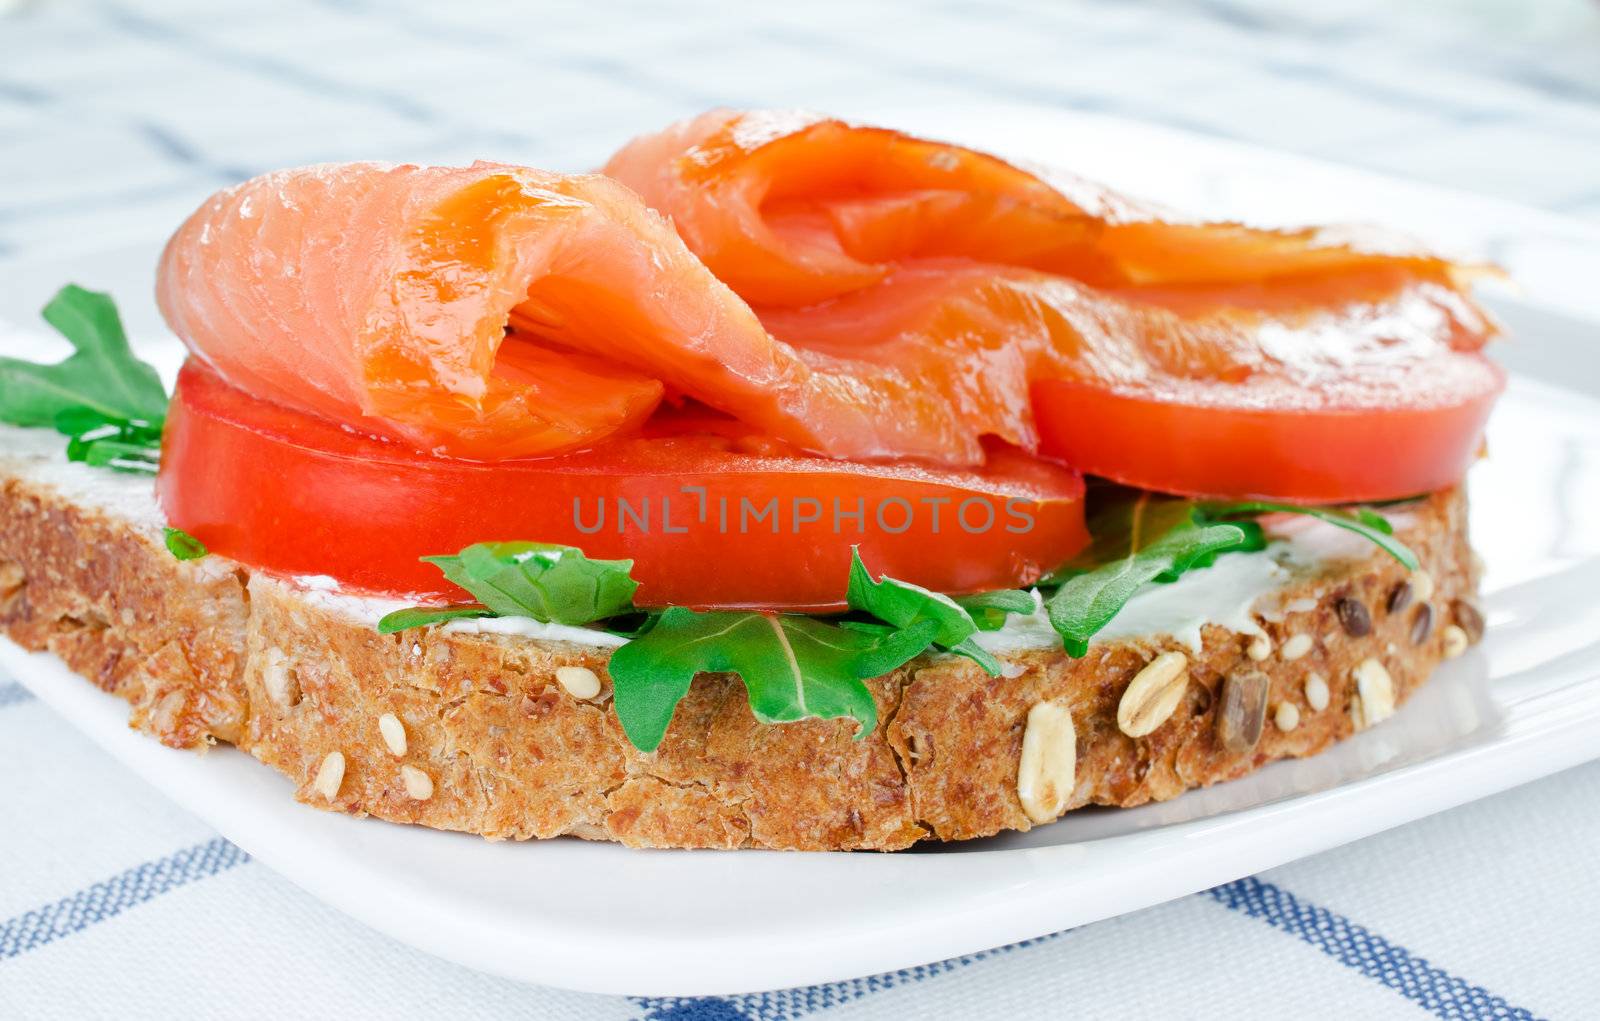 Smoked salmon sandwich with tomato, rucola, cream sandwich on rye bread